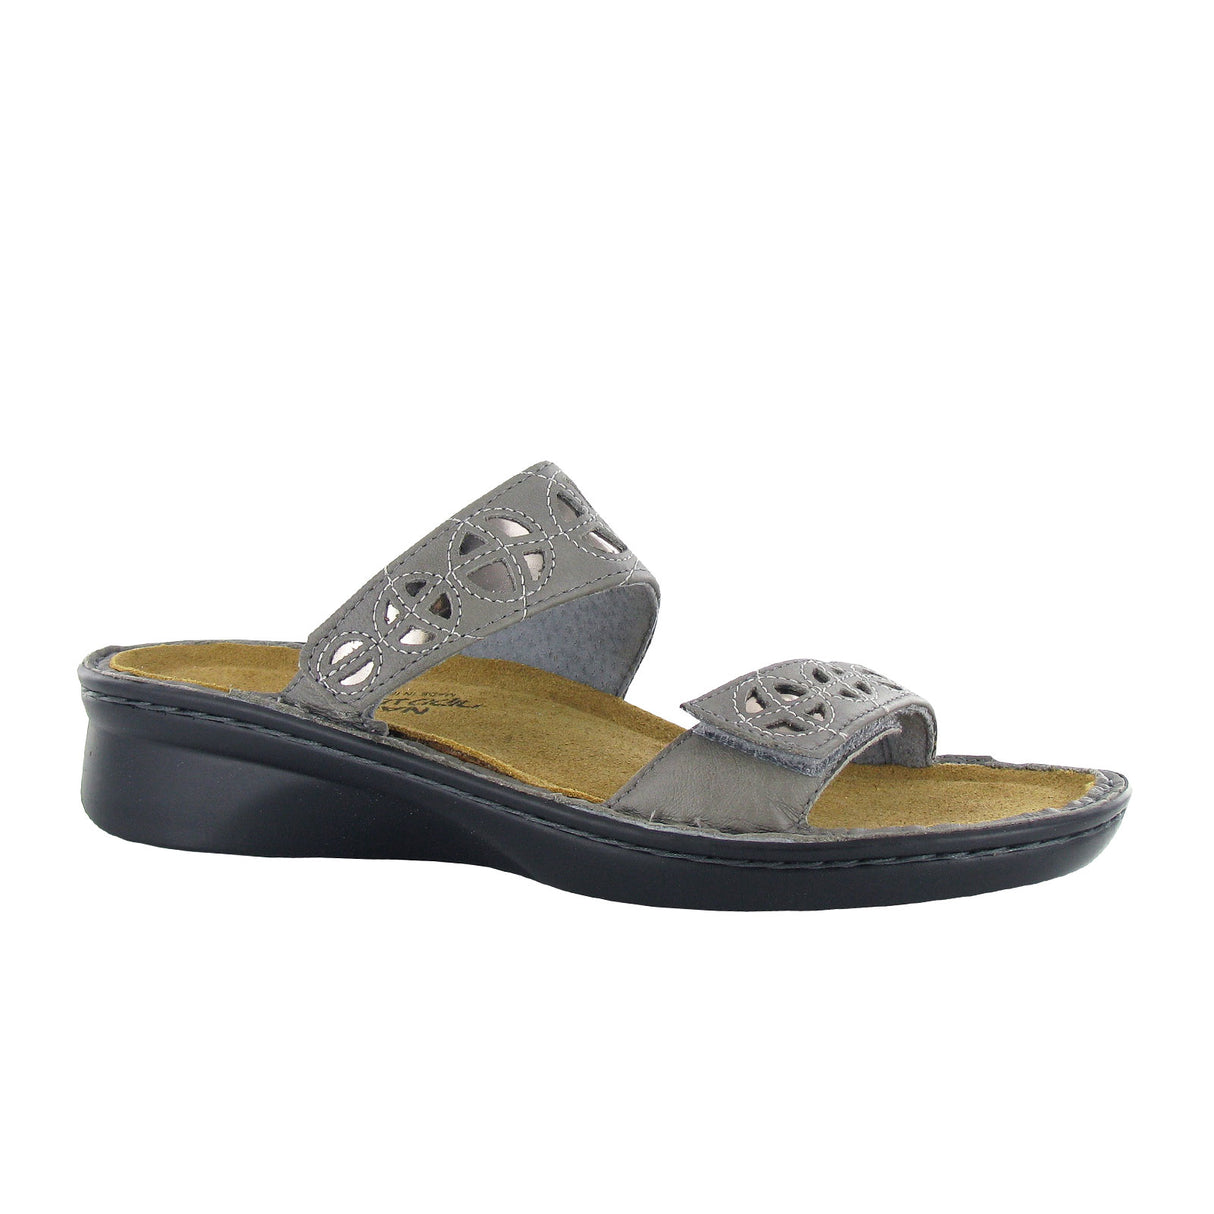 Naot Cornet Slide Sandal (Women) - Foggy Gray Leather/Glass Silver Sandals - Slide - The Heel Shoe Fitters